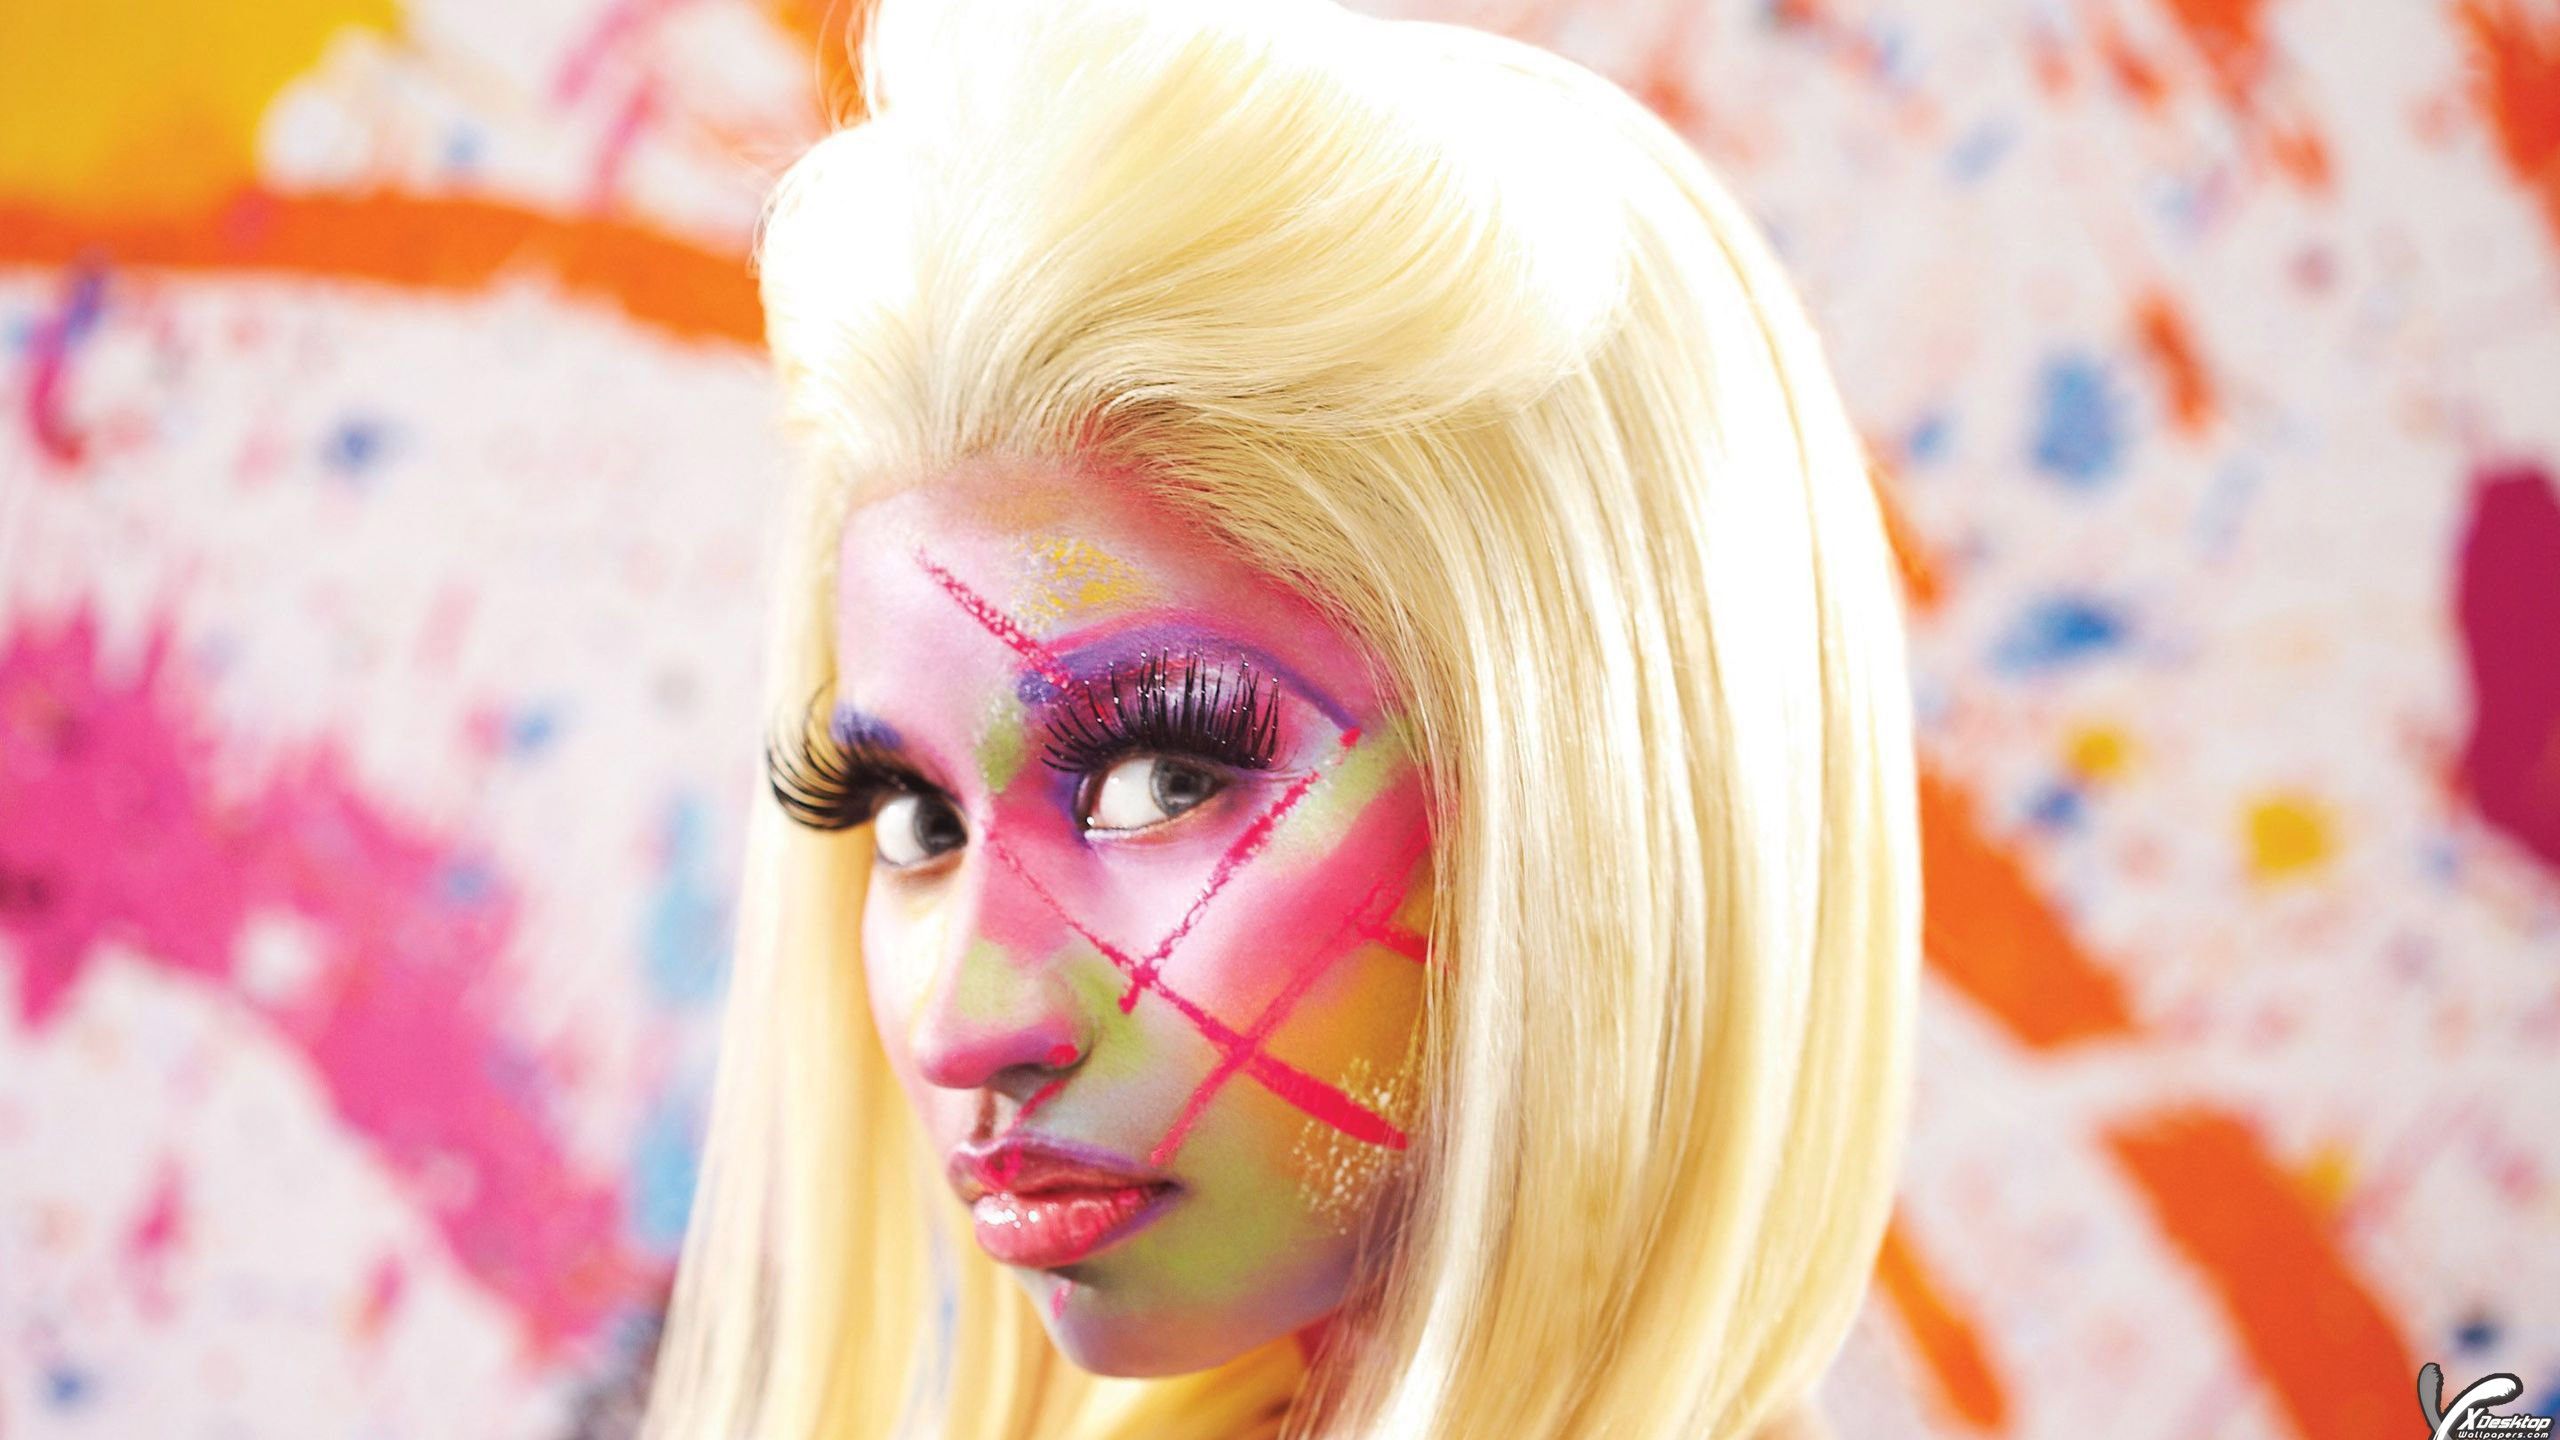 Nicki Minaj Angry Look Face Closeup Wallpaper